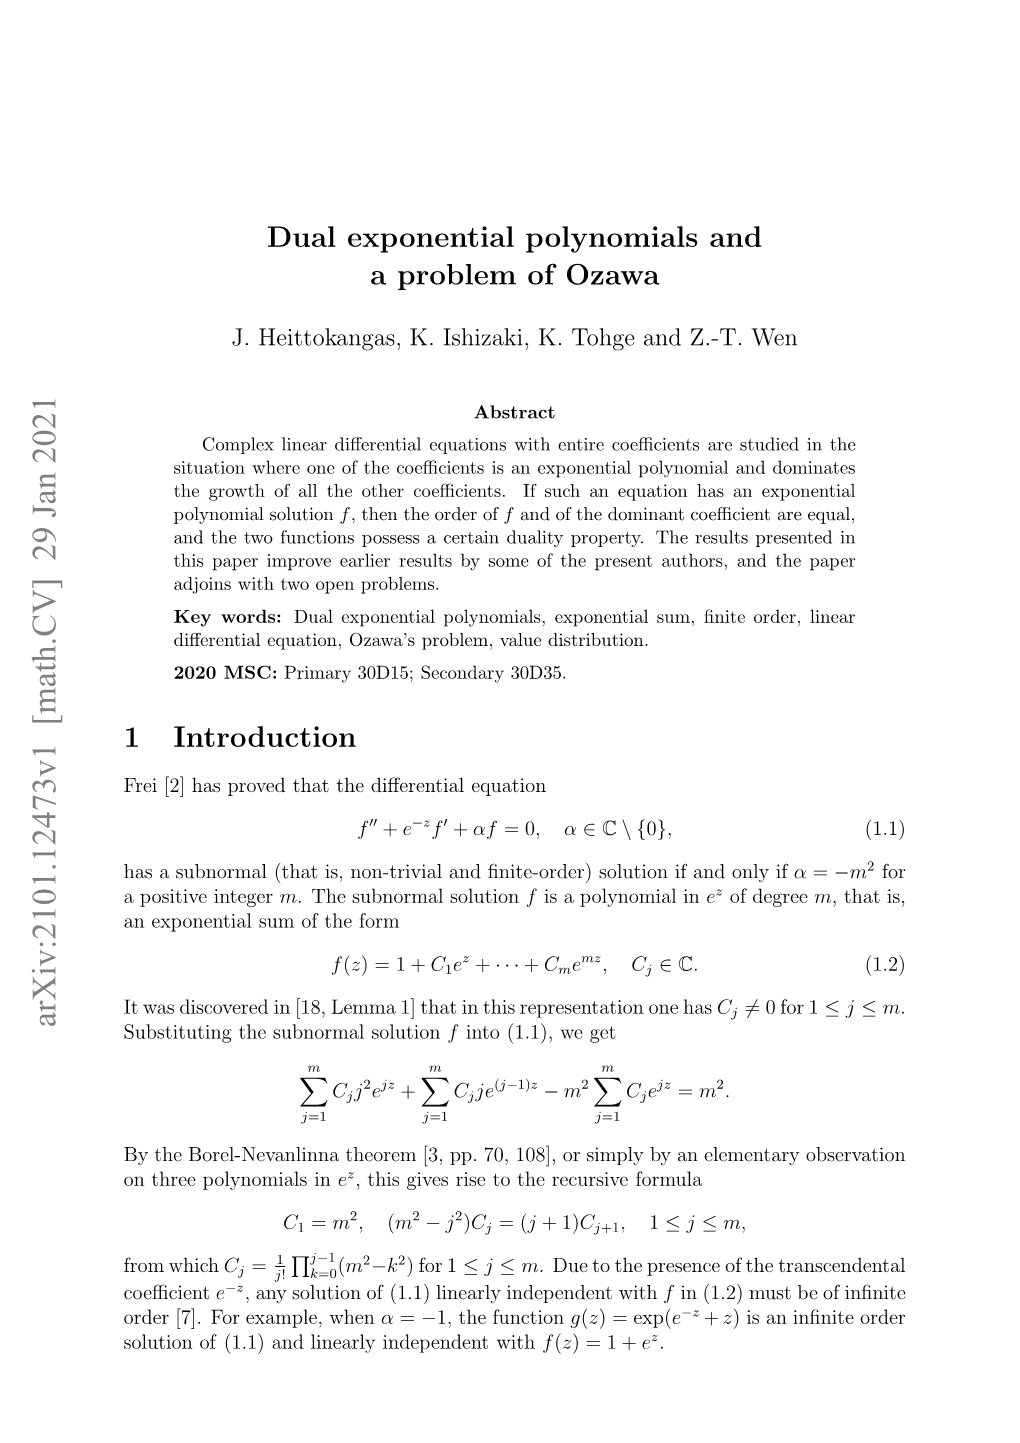 Dual Exponential Polynomials and a Problem of Ozawa 2